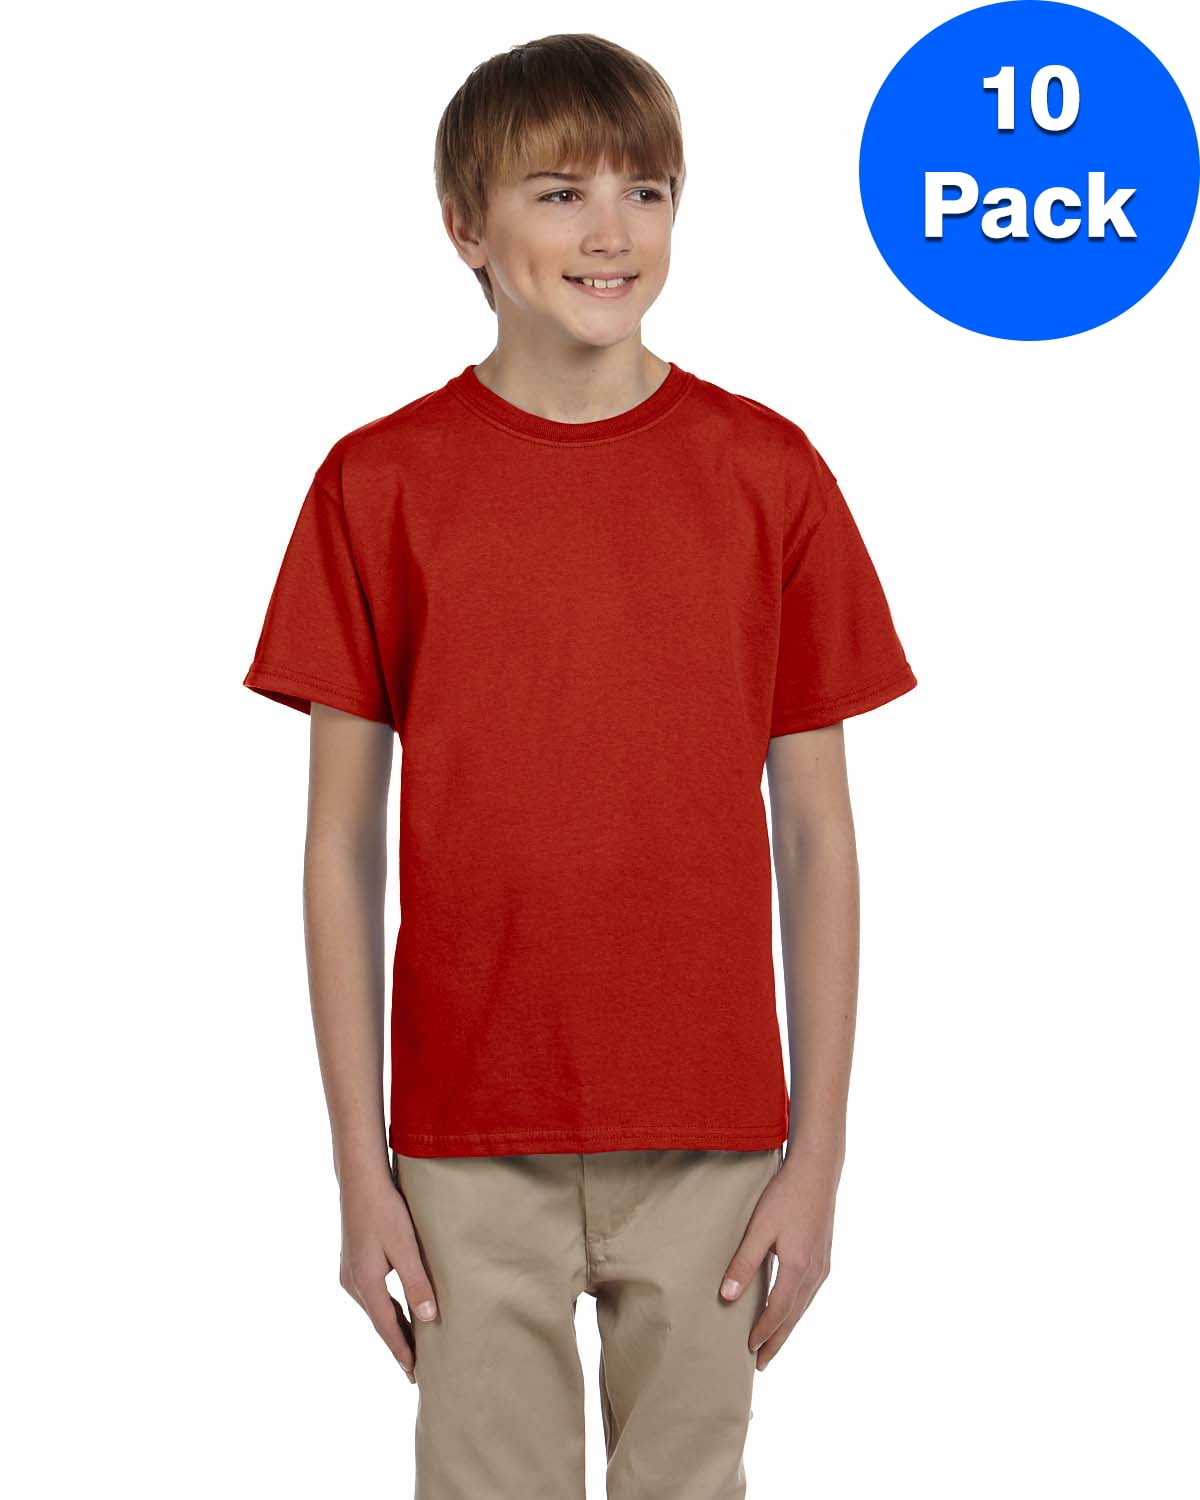 Boys 5.2 oz., 50/50 ComfortBlend EcoSmart T-Shirt 5370 (10 PACK) 